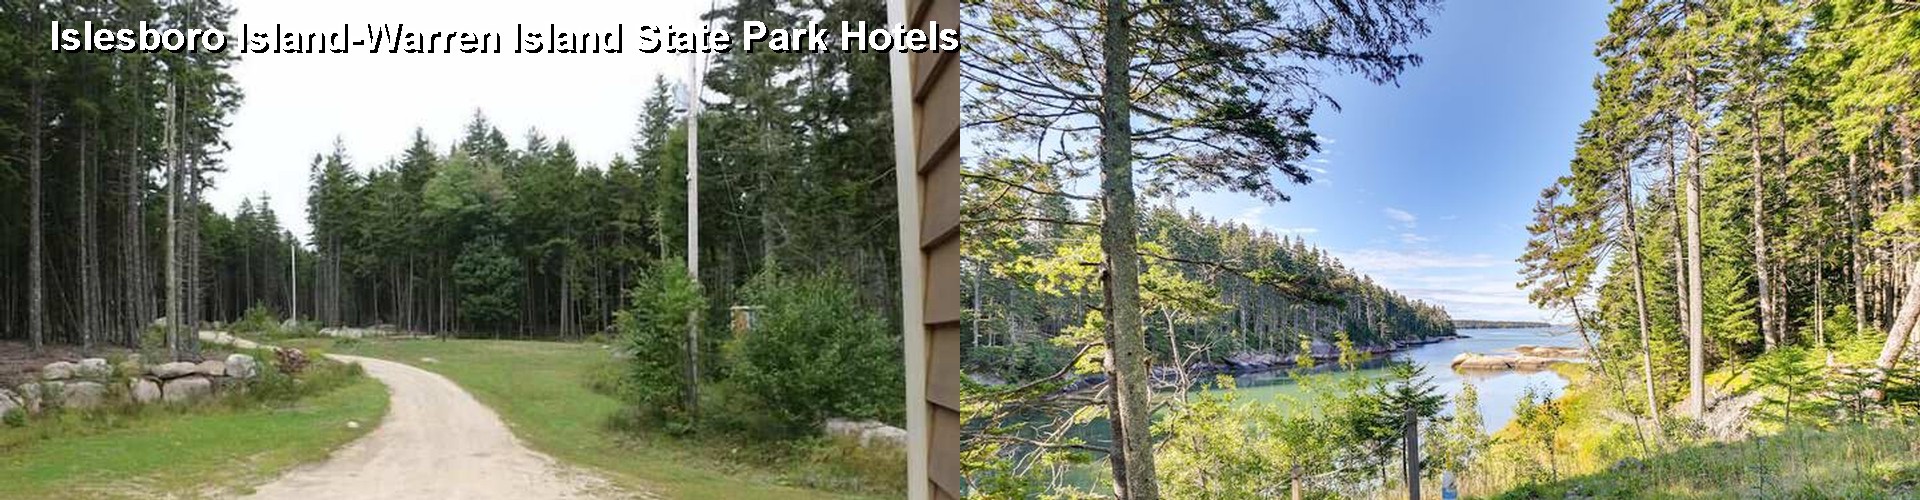 5 Best Hotels near Islesboro Island-Warren Island State Park